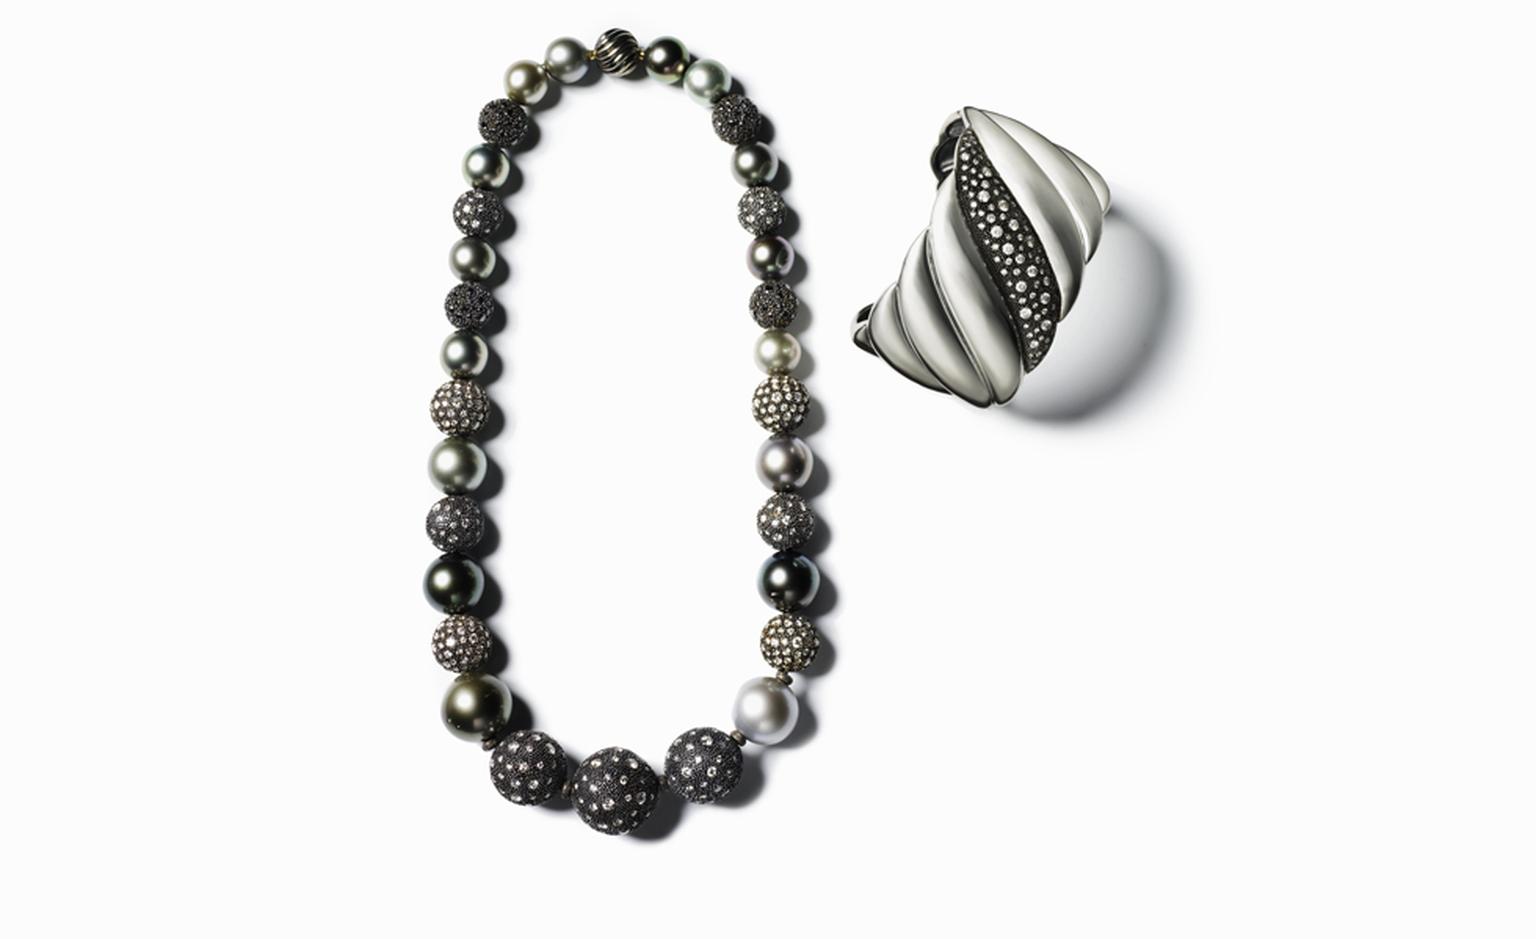 DAVID YURMAN, Midnight Mélange Bead necklace, $38,000. Midnight mélange cuff, $4750